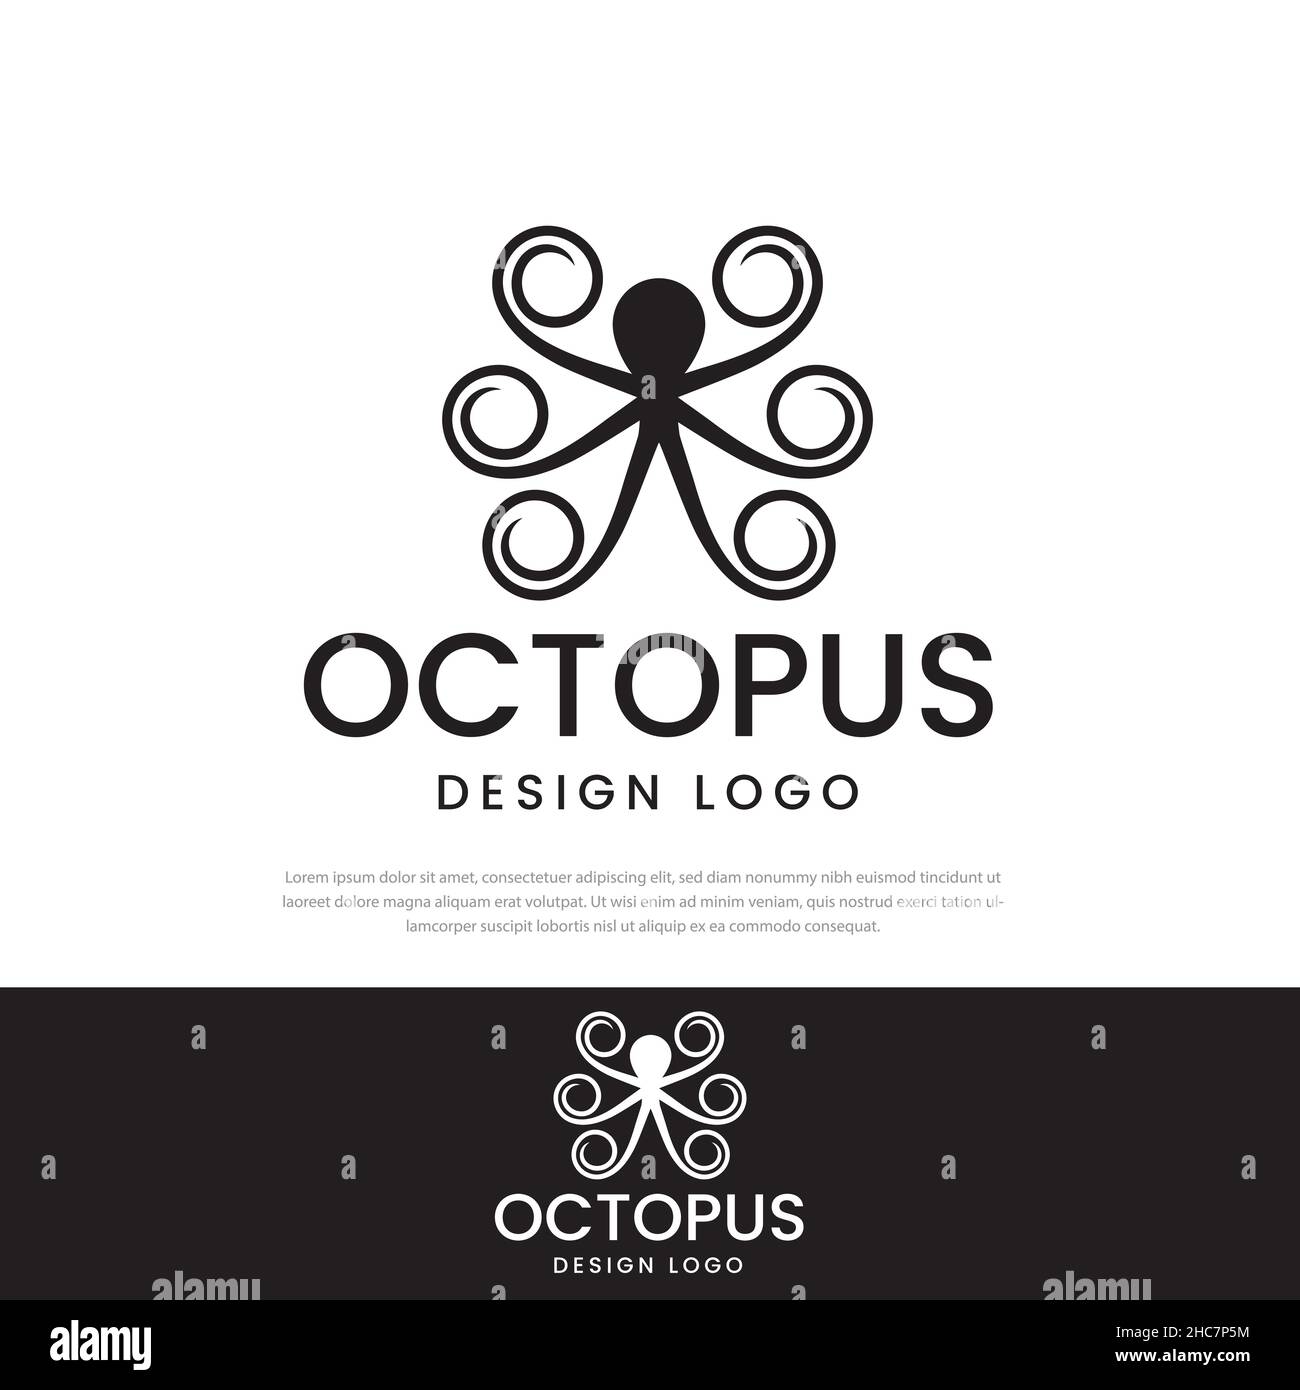 Logo Six tentacle octopus silhouette design, design templates, icons, symbols, design illustration Stock Vector